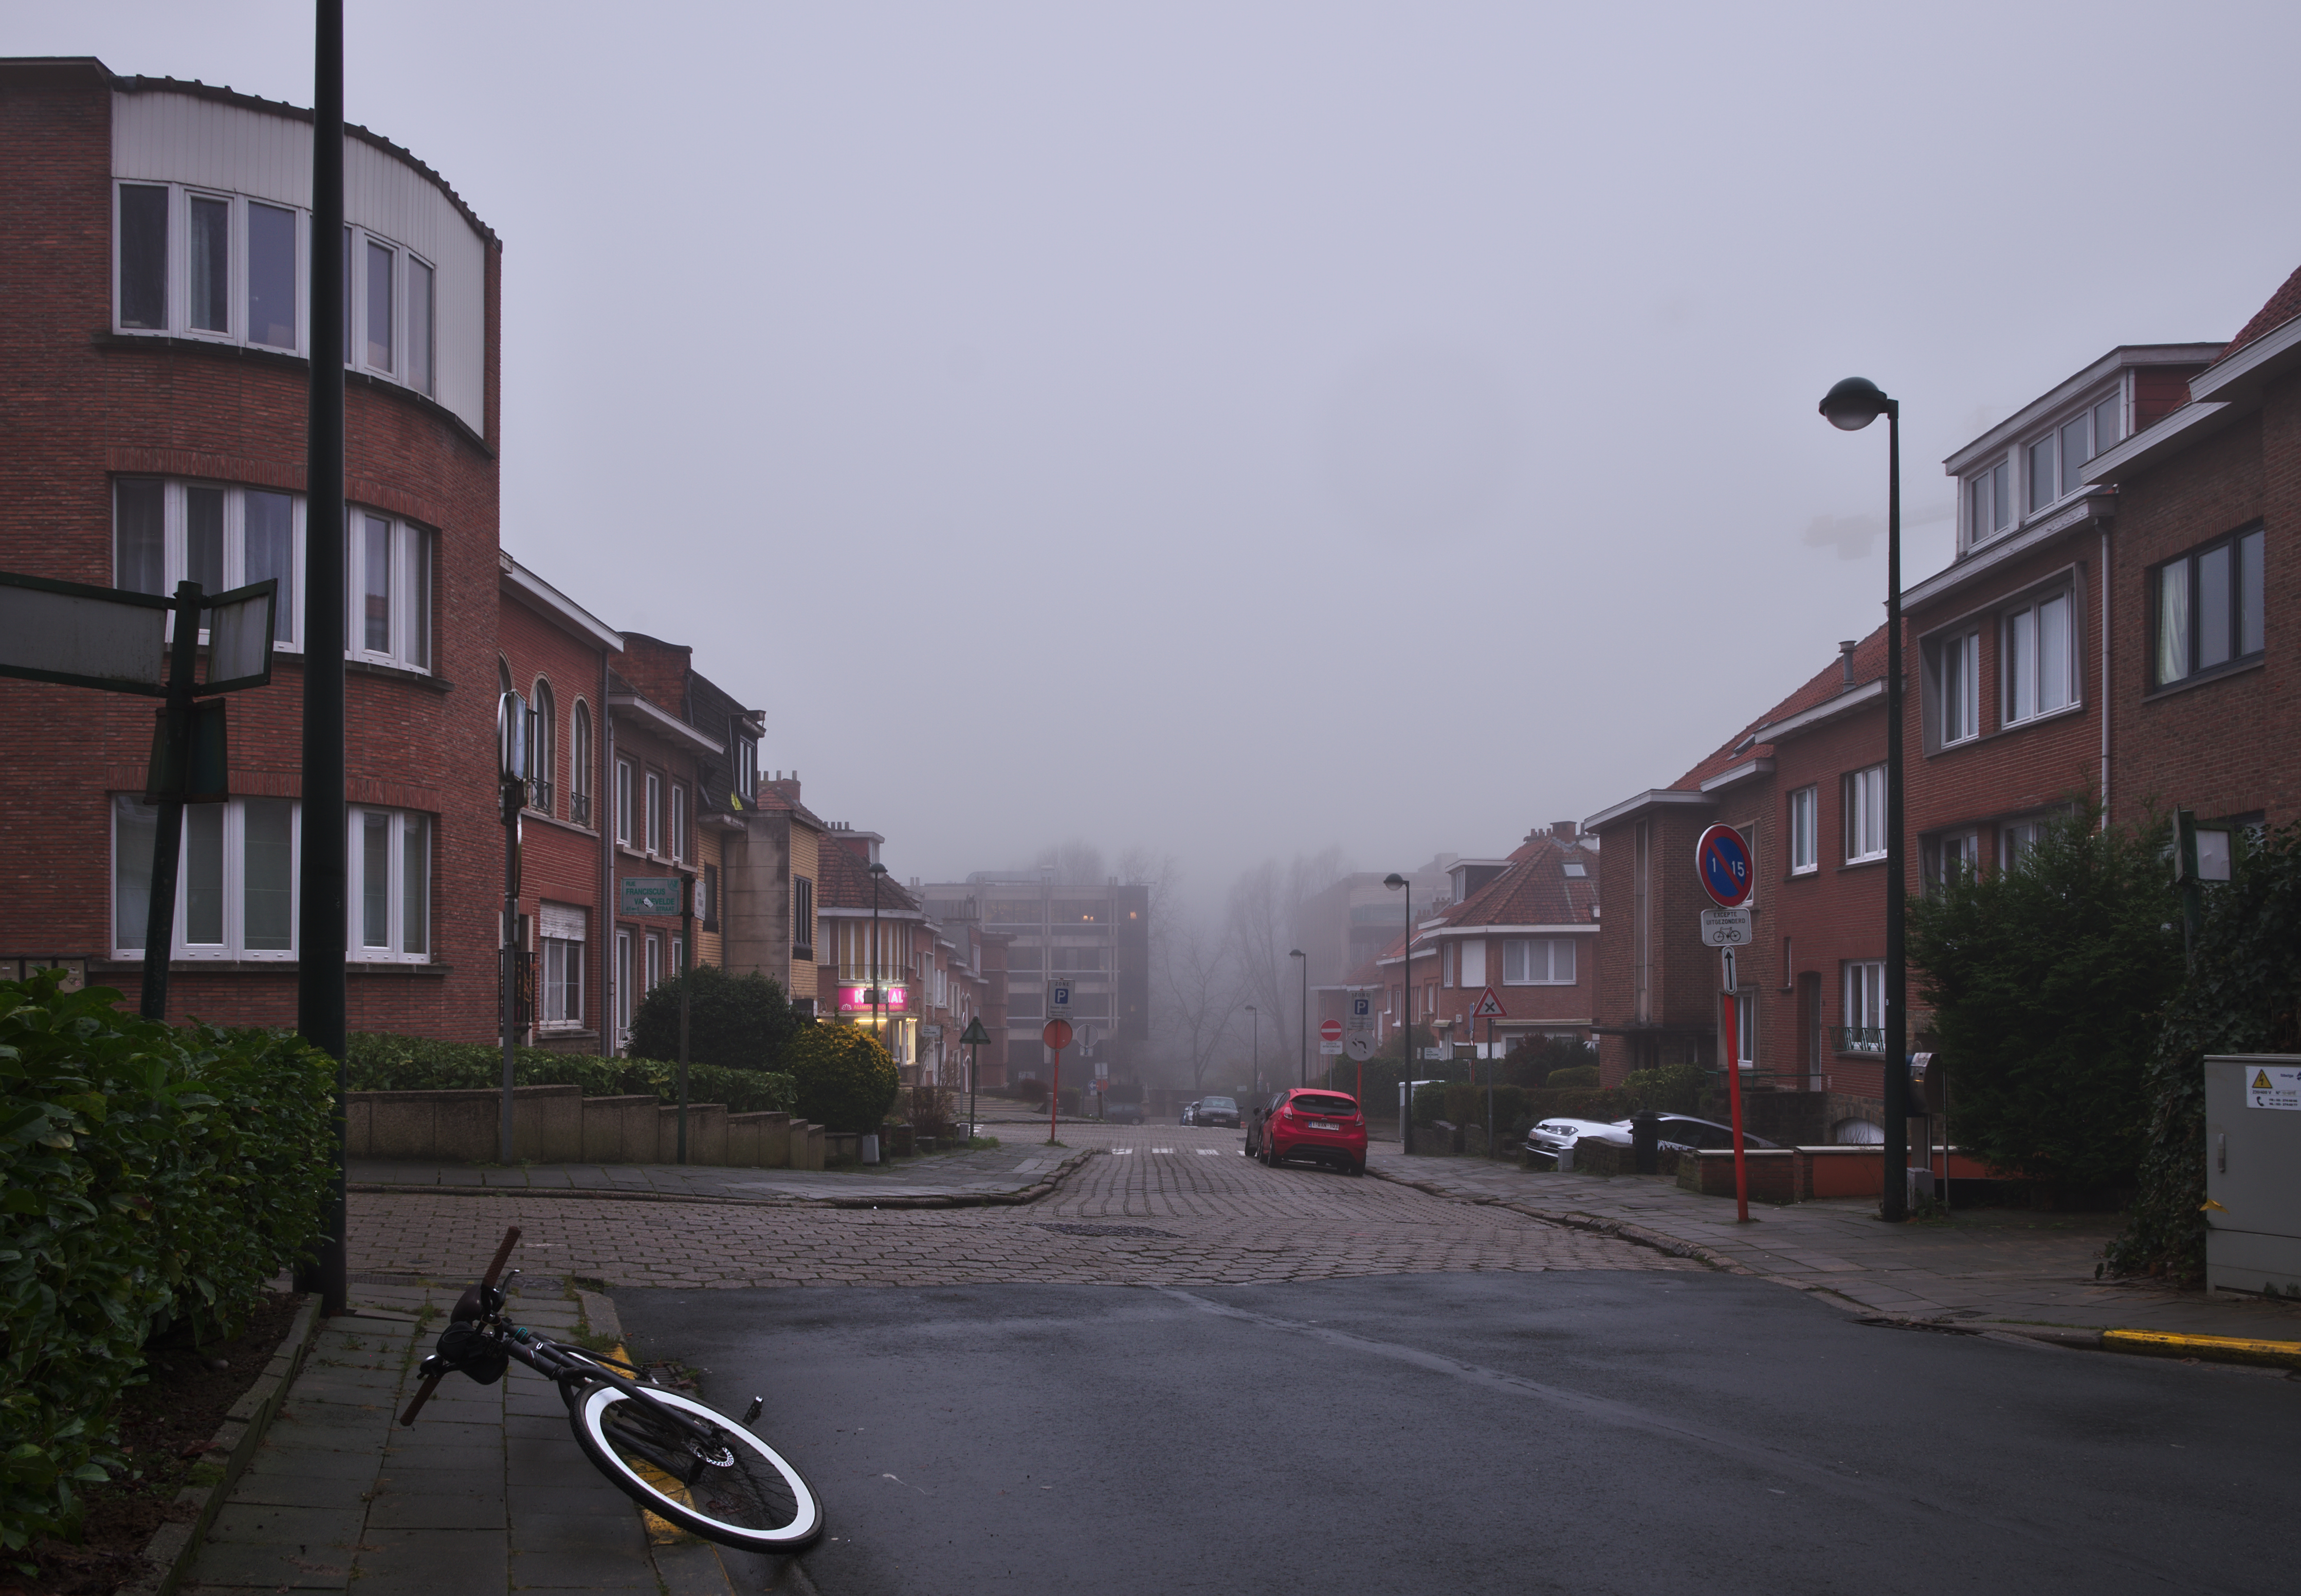 Rue François Bekaert photographed from East to West on a foggy December late afternoon (Auderghem, Belgium)